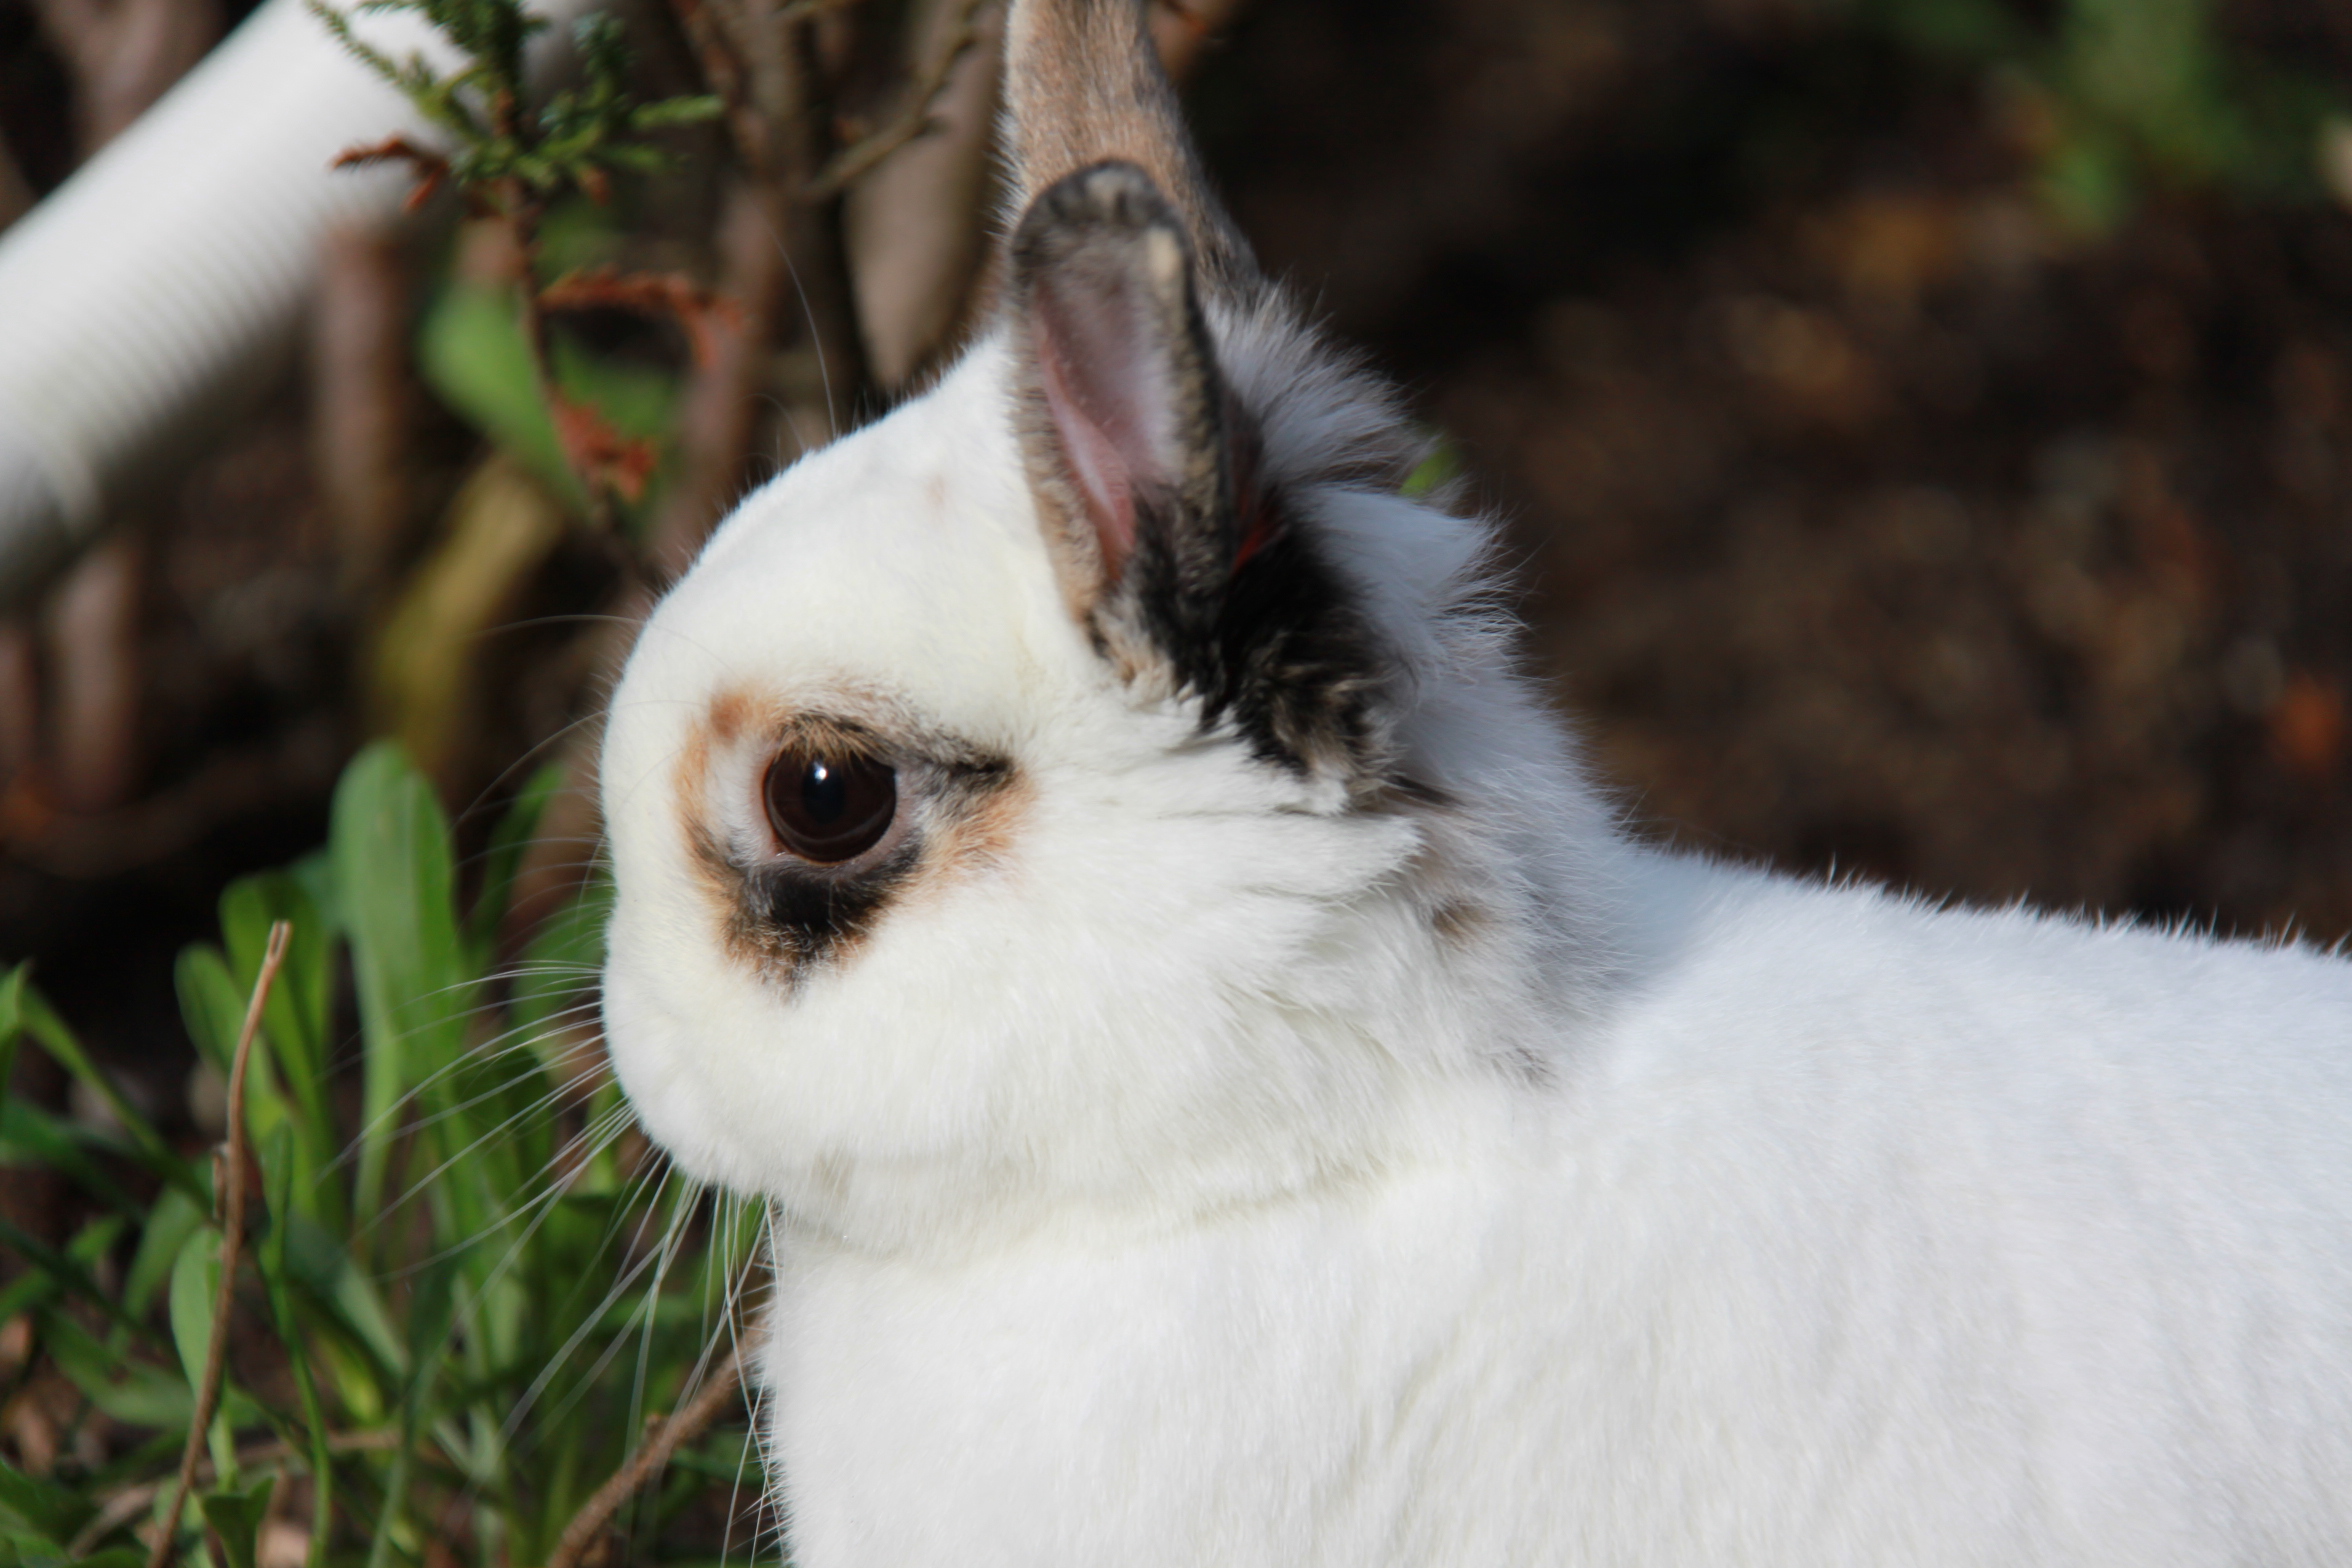 Little Bunny in Profile